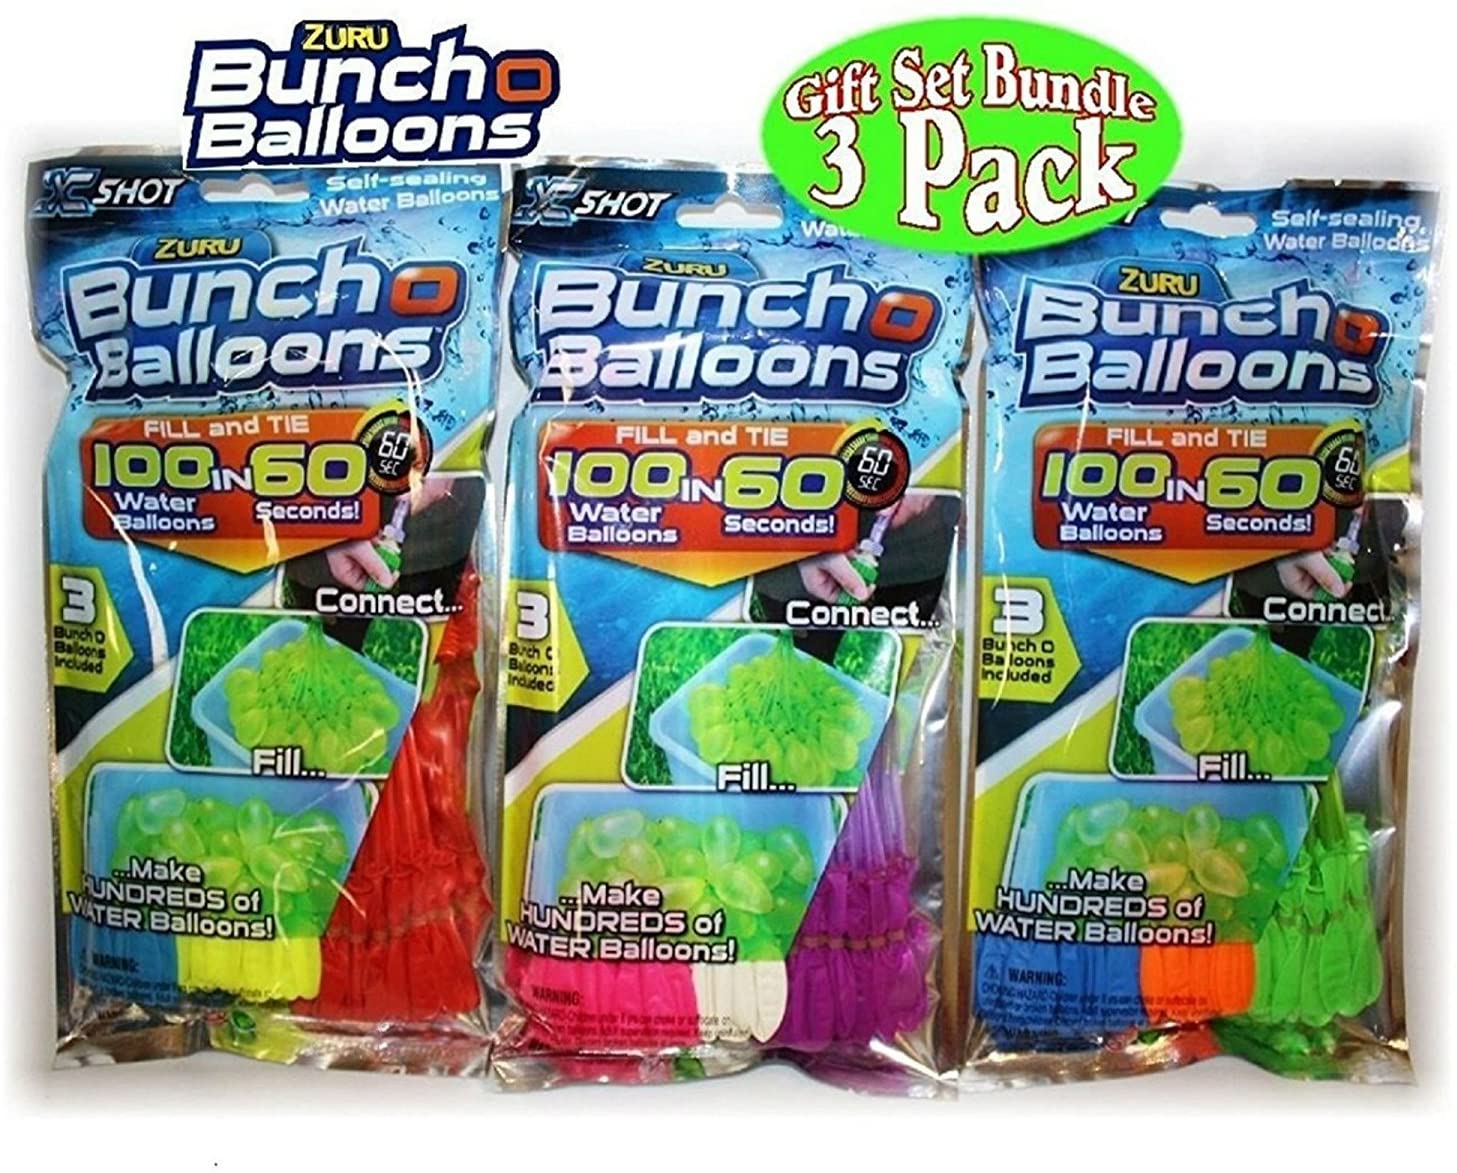 Zuru Bunch O Balloons Instant Self-Sealing Water Balloons, 3-Pack